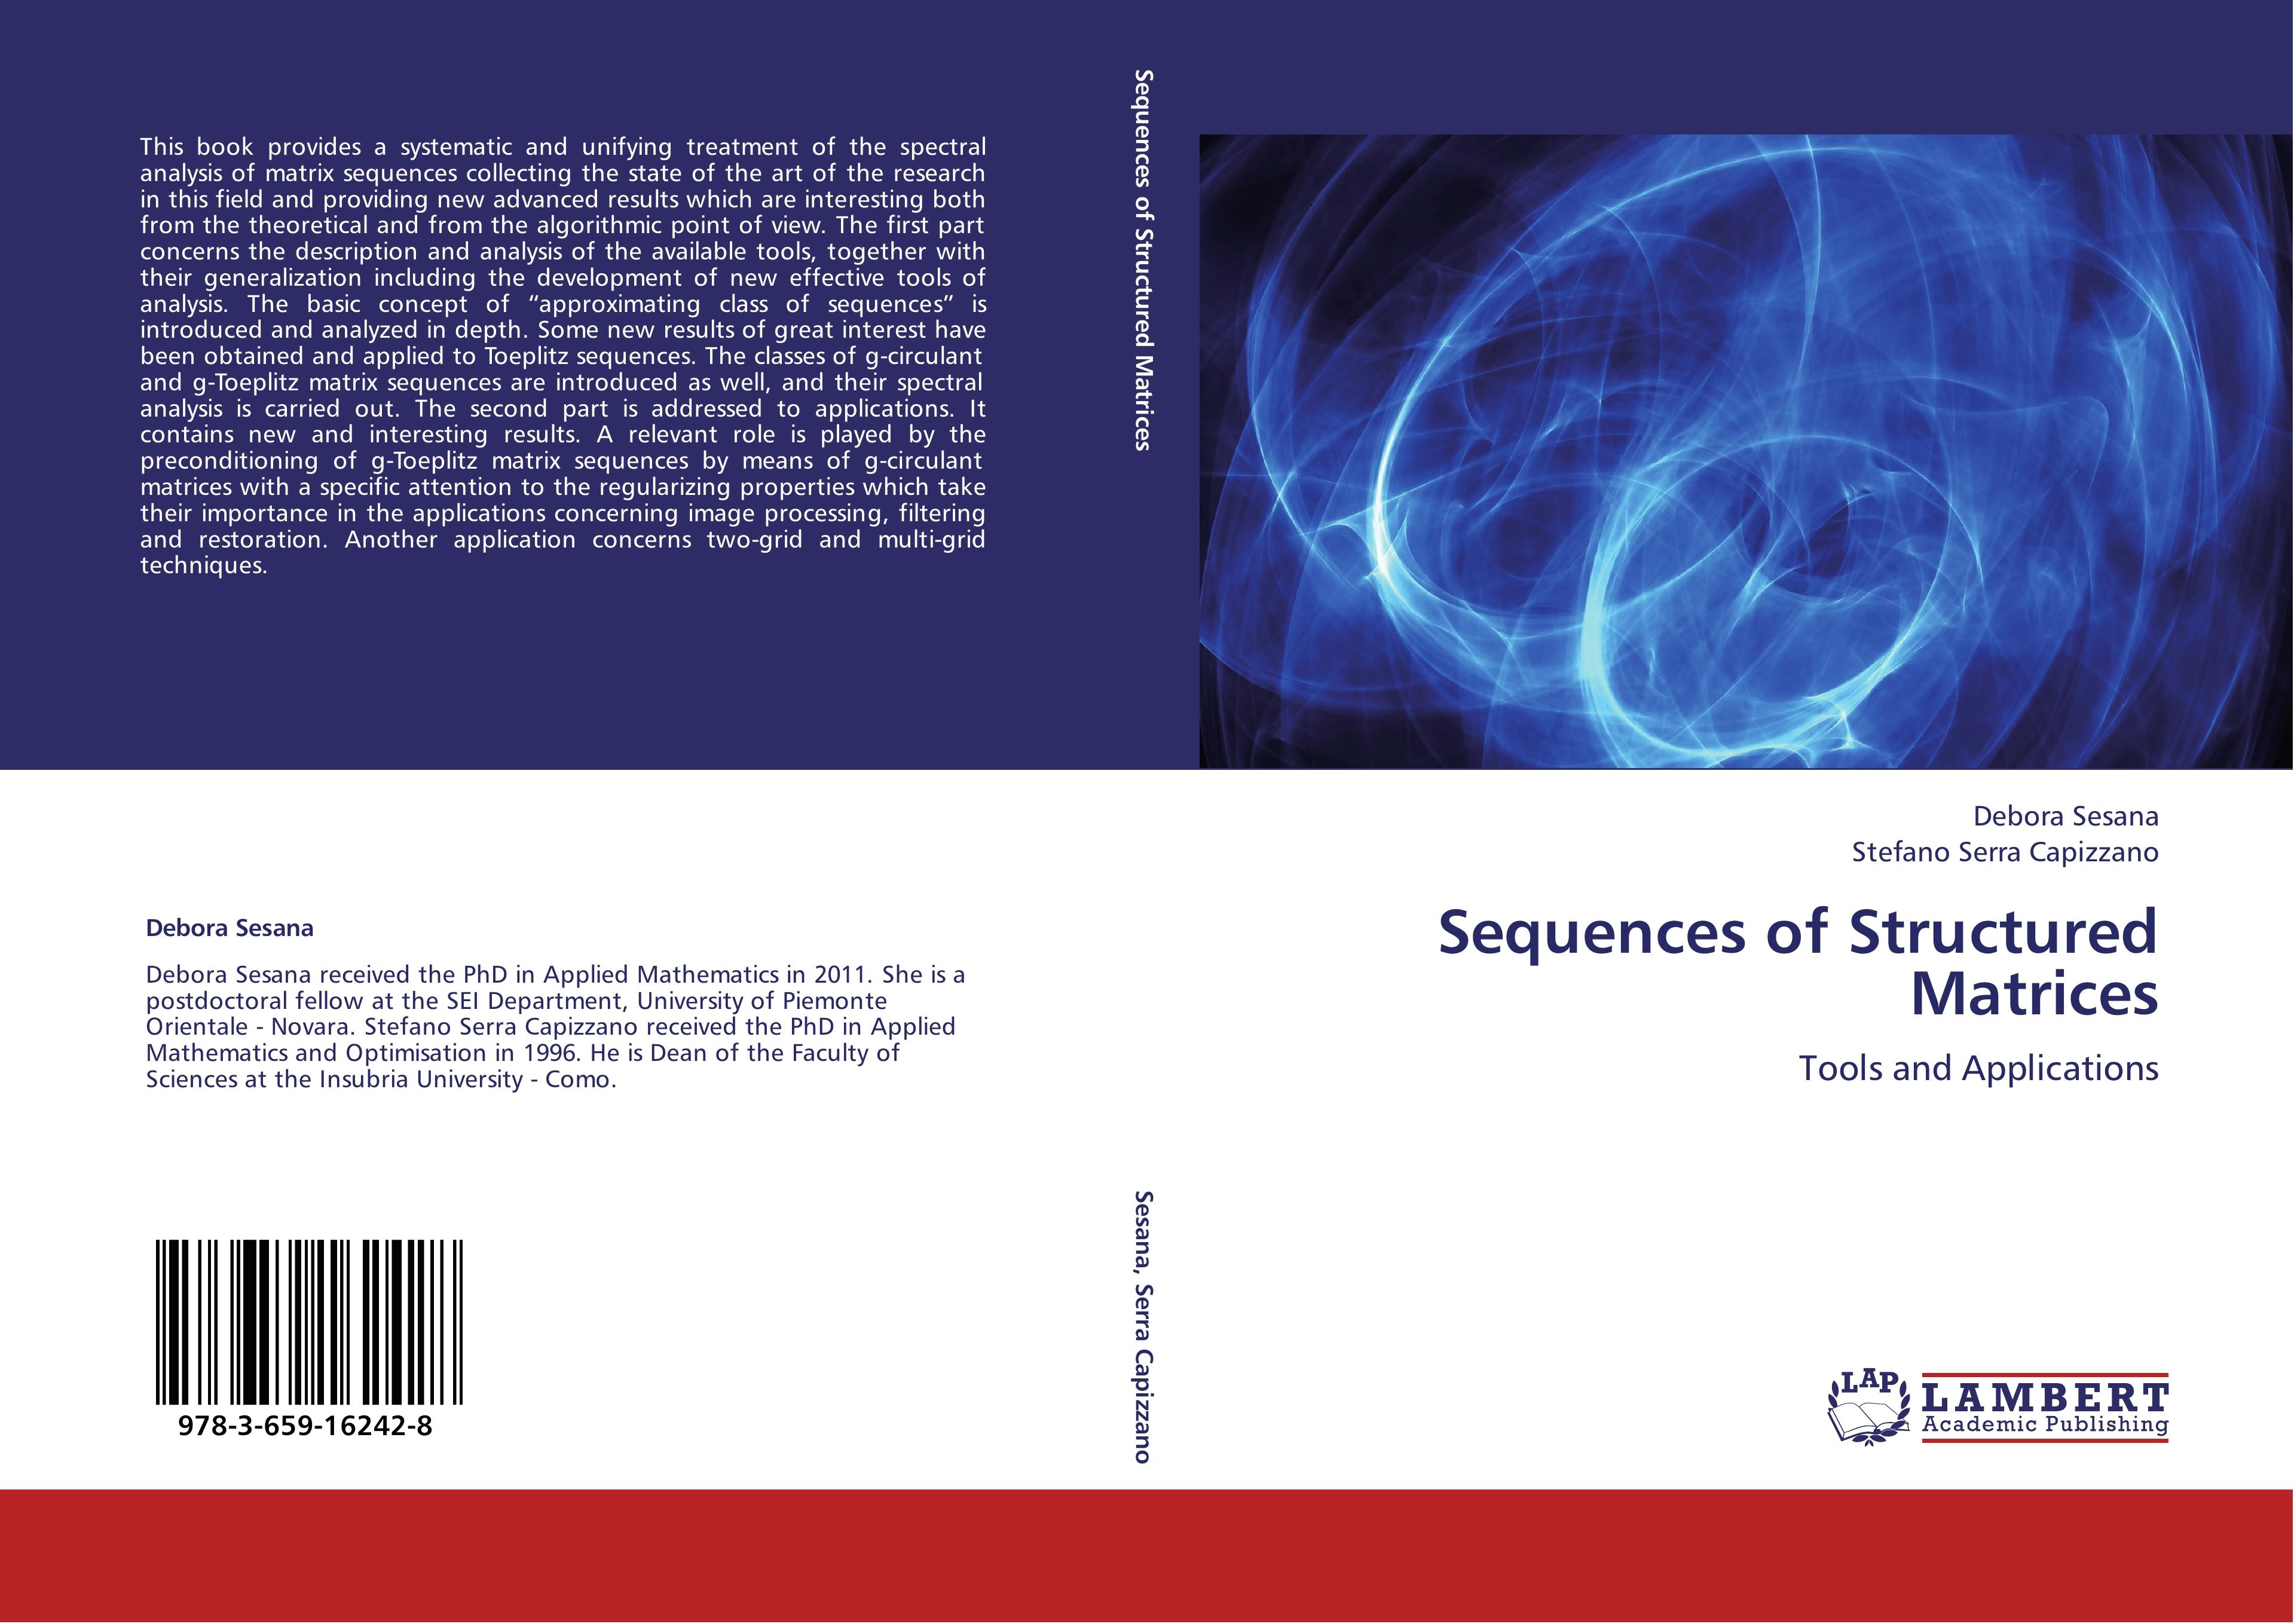 Sequences of Structured Matrices - Debora Sesana Stefano Serra Capizzano